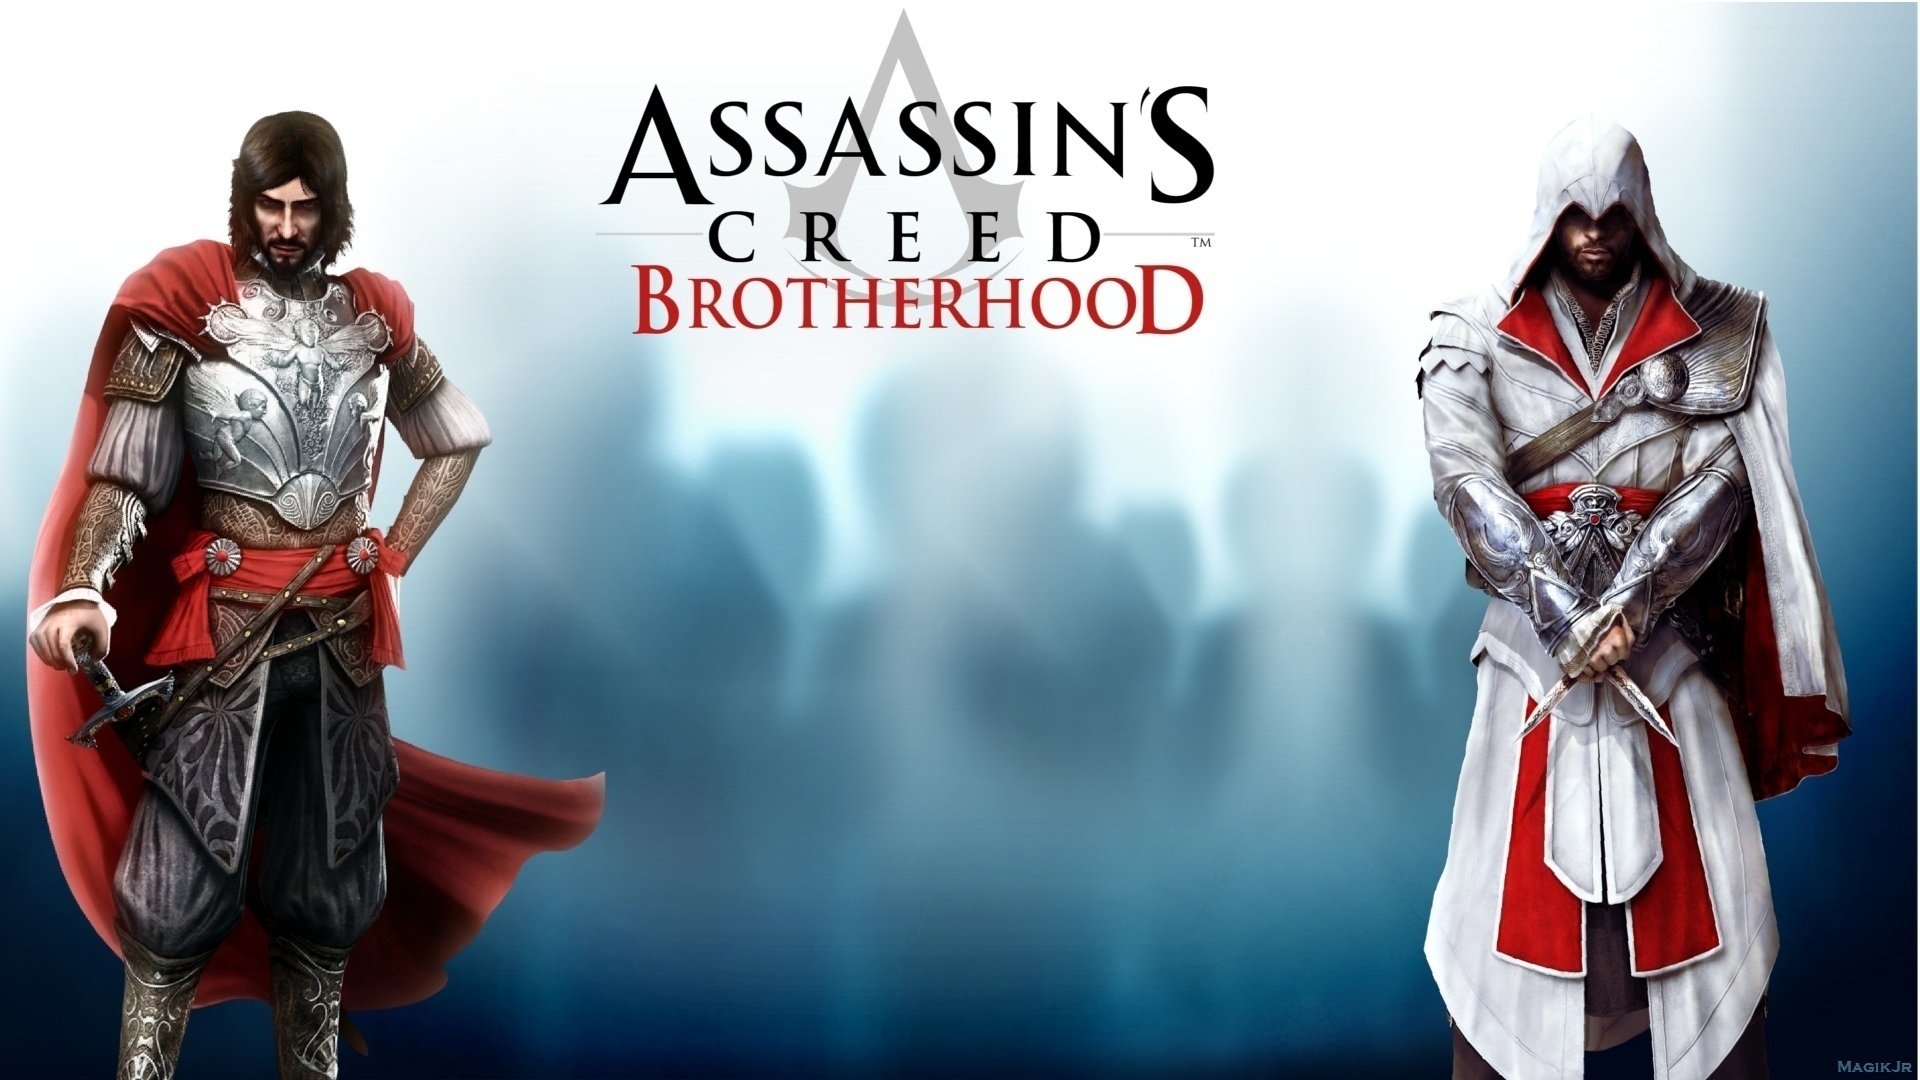 Best Assassin's Creed: Brotherhood wallpaper ID:452951 for High Resolution full hd 1080p desktop